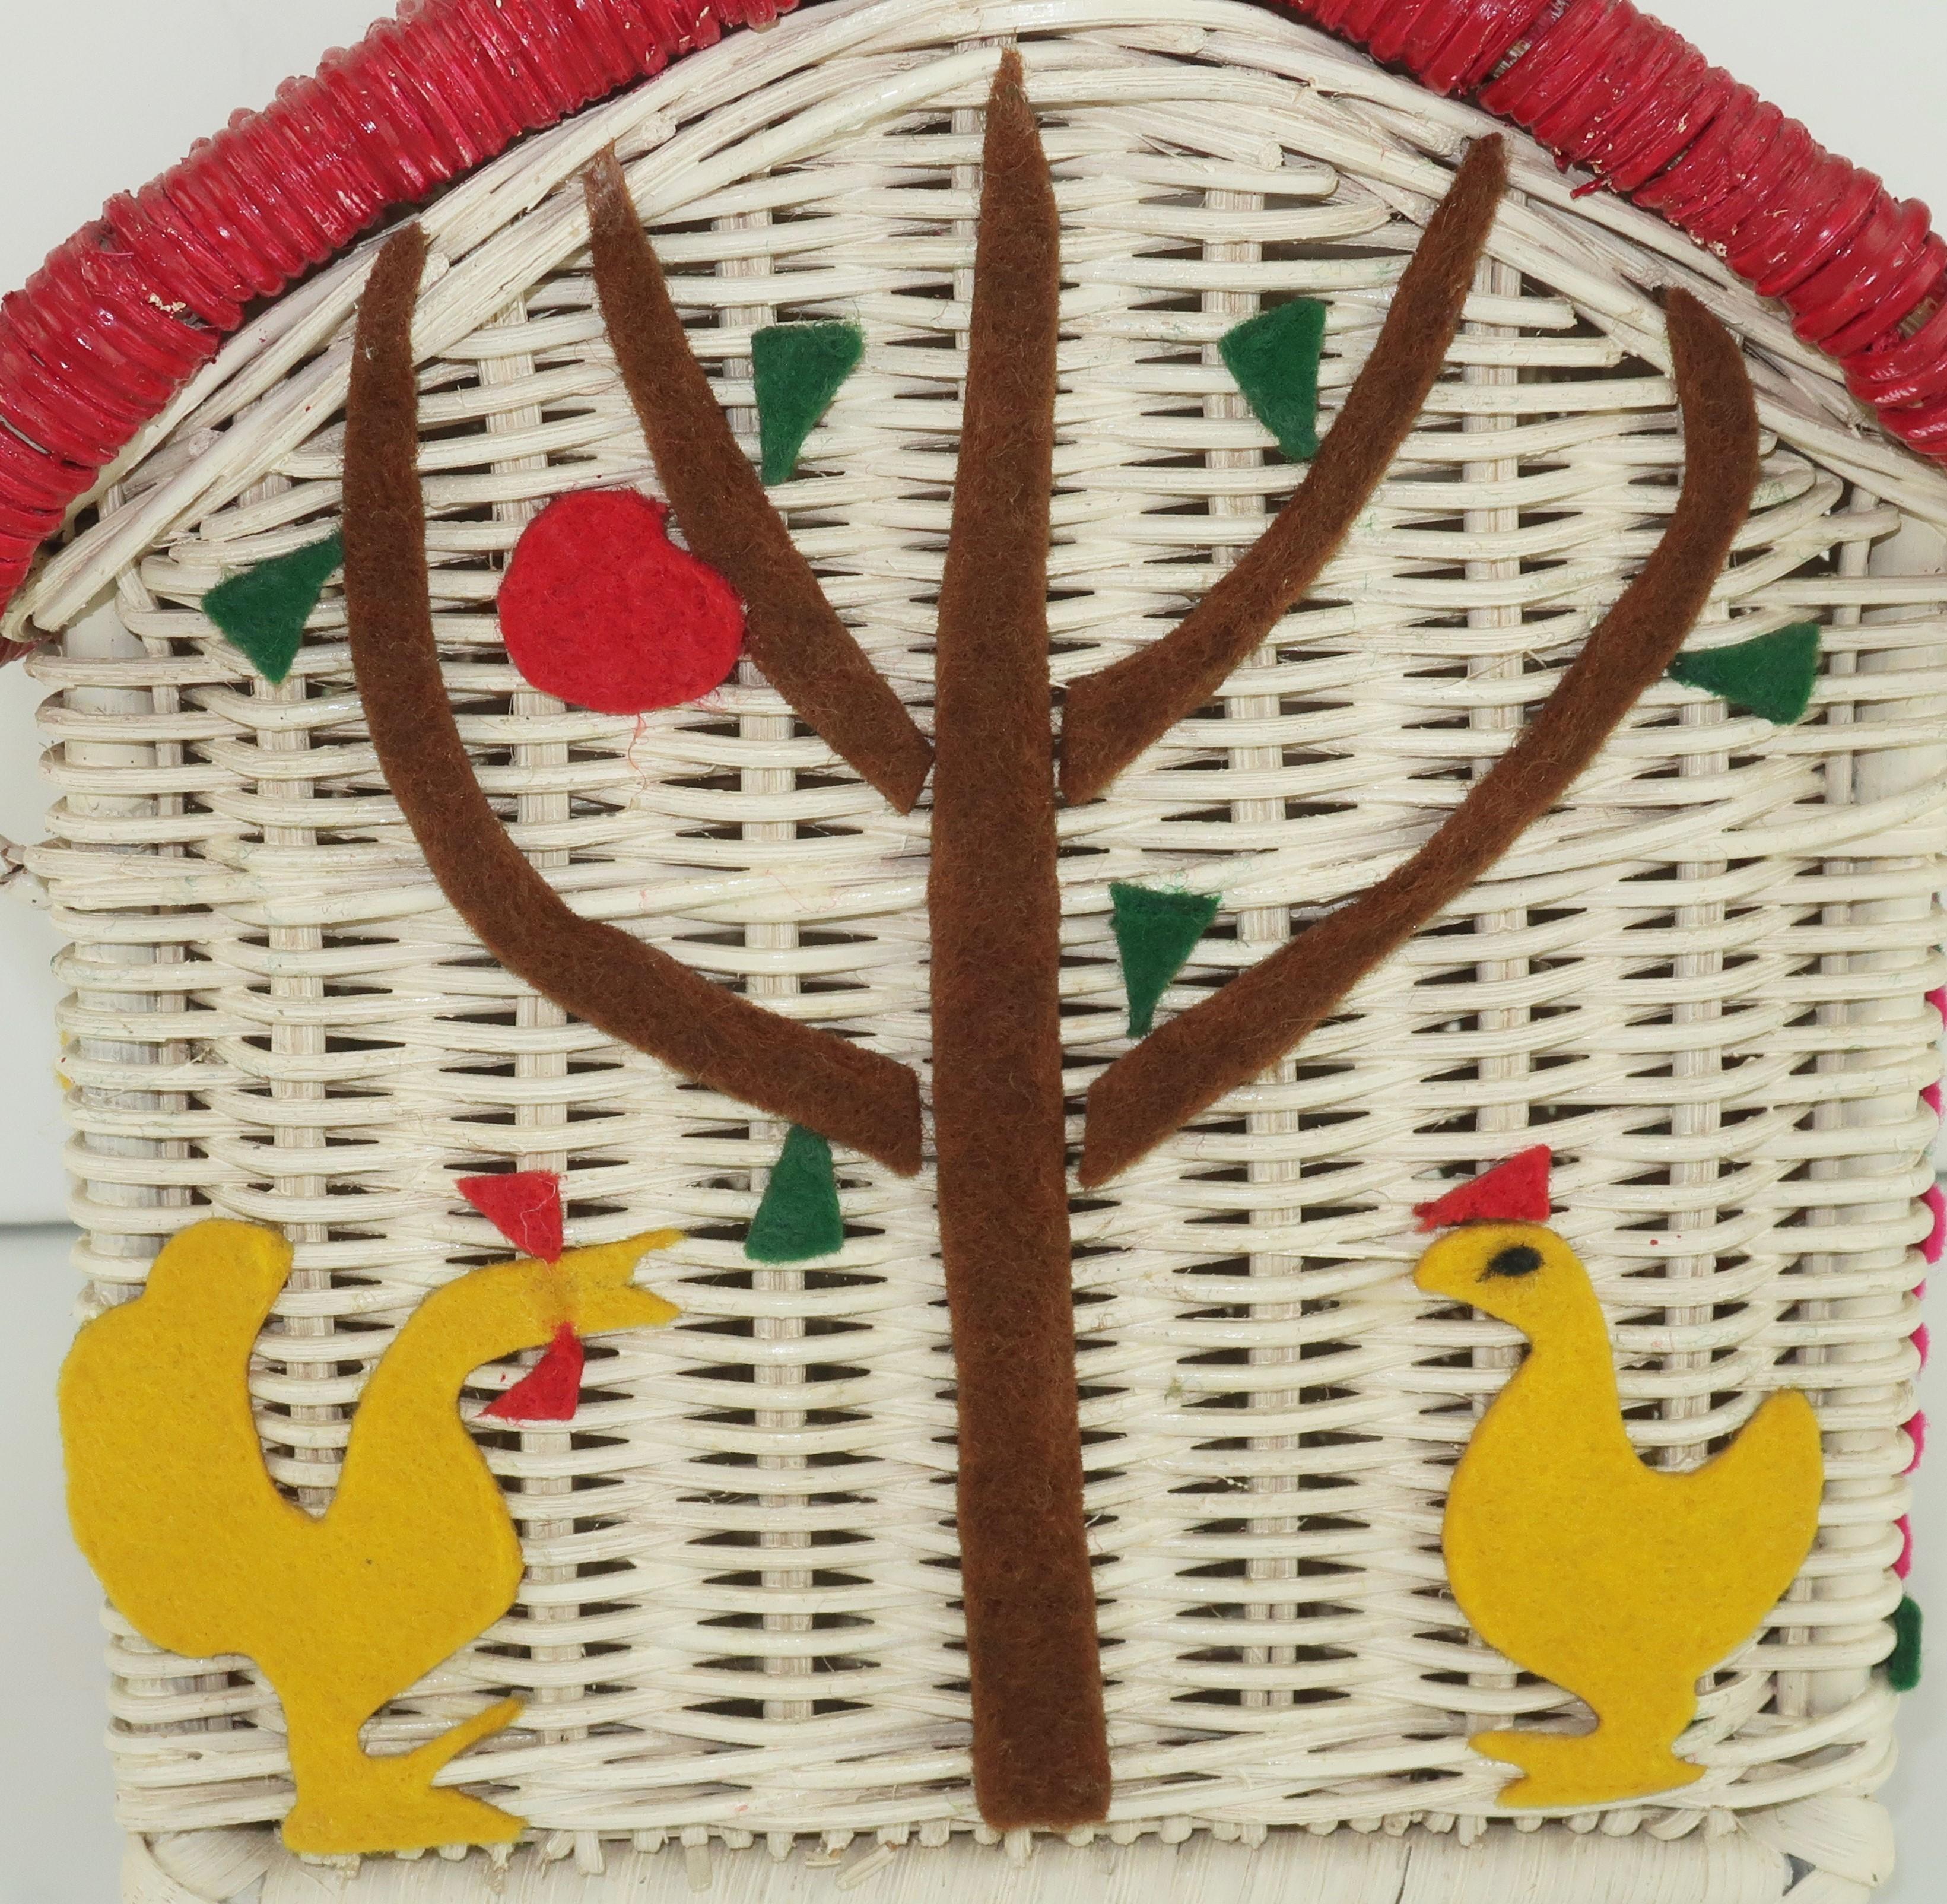 Women's Wicker Cottage House Novelty Basket Handbag, 1950's